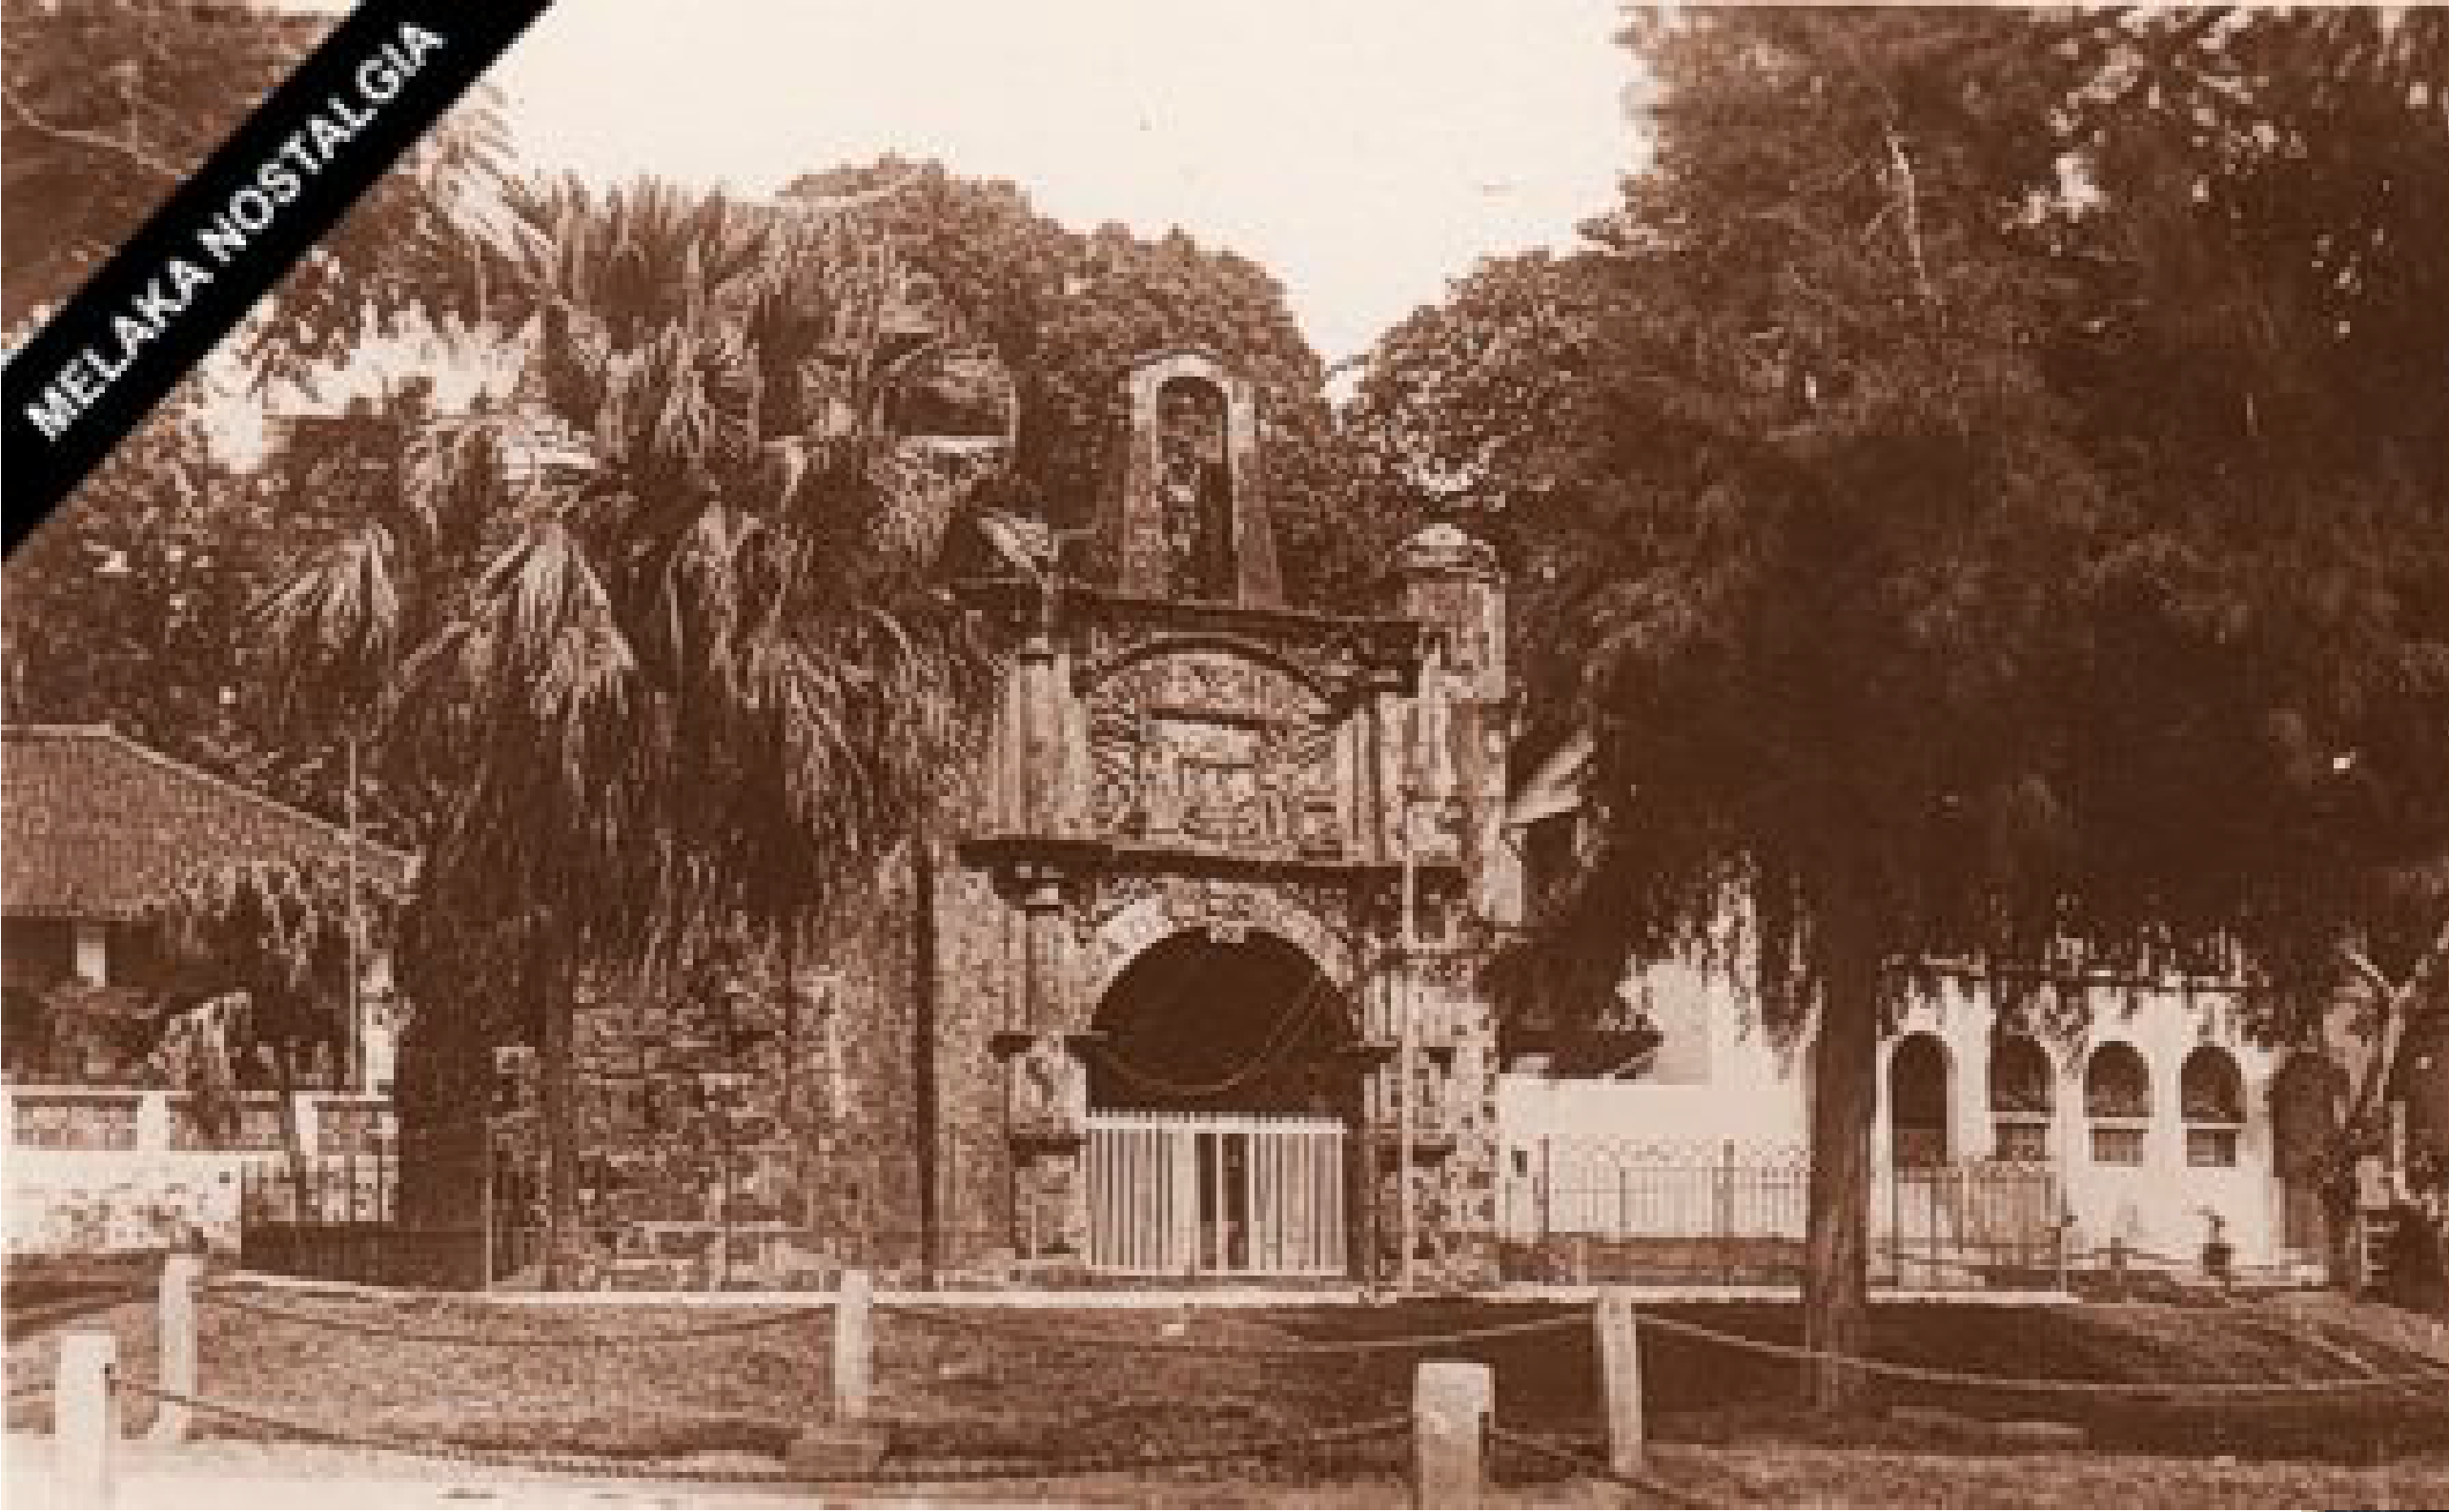 Porta De Santiago circa 1920 (source: Melaka Nostalgia)